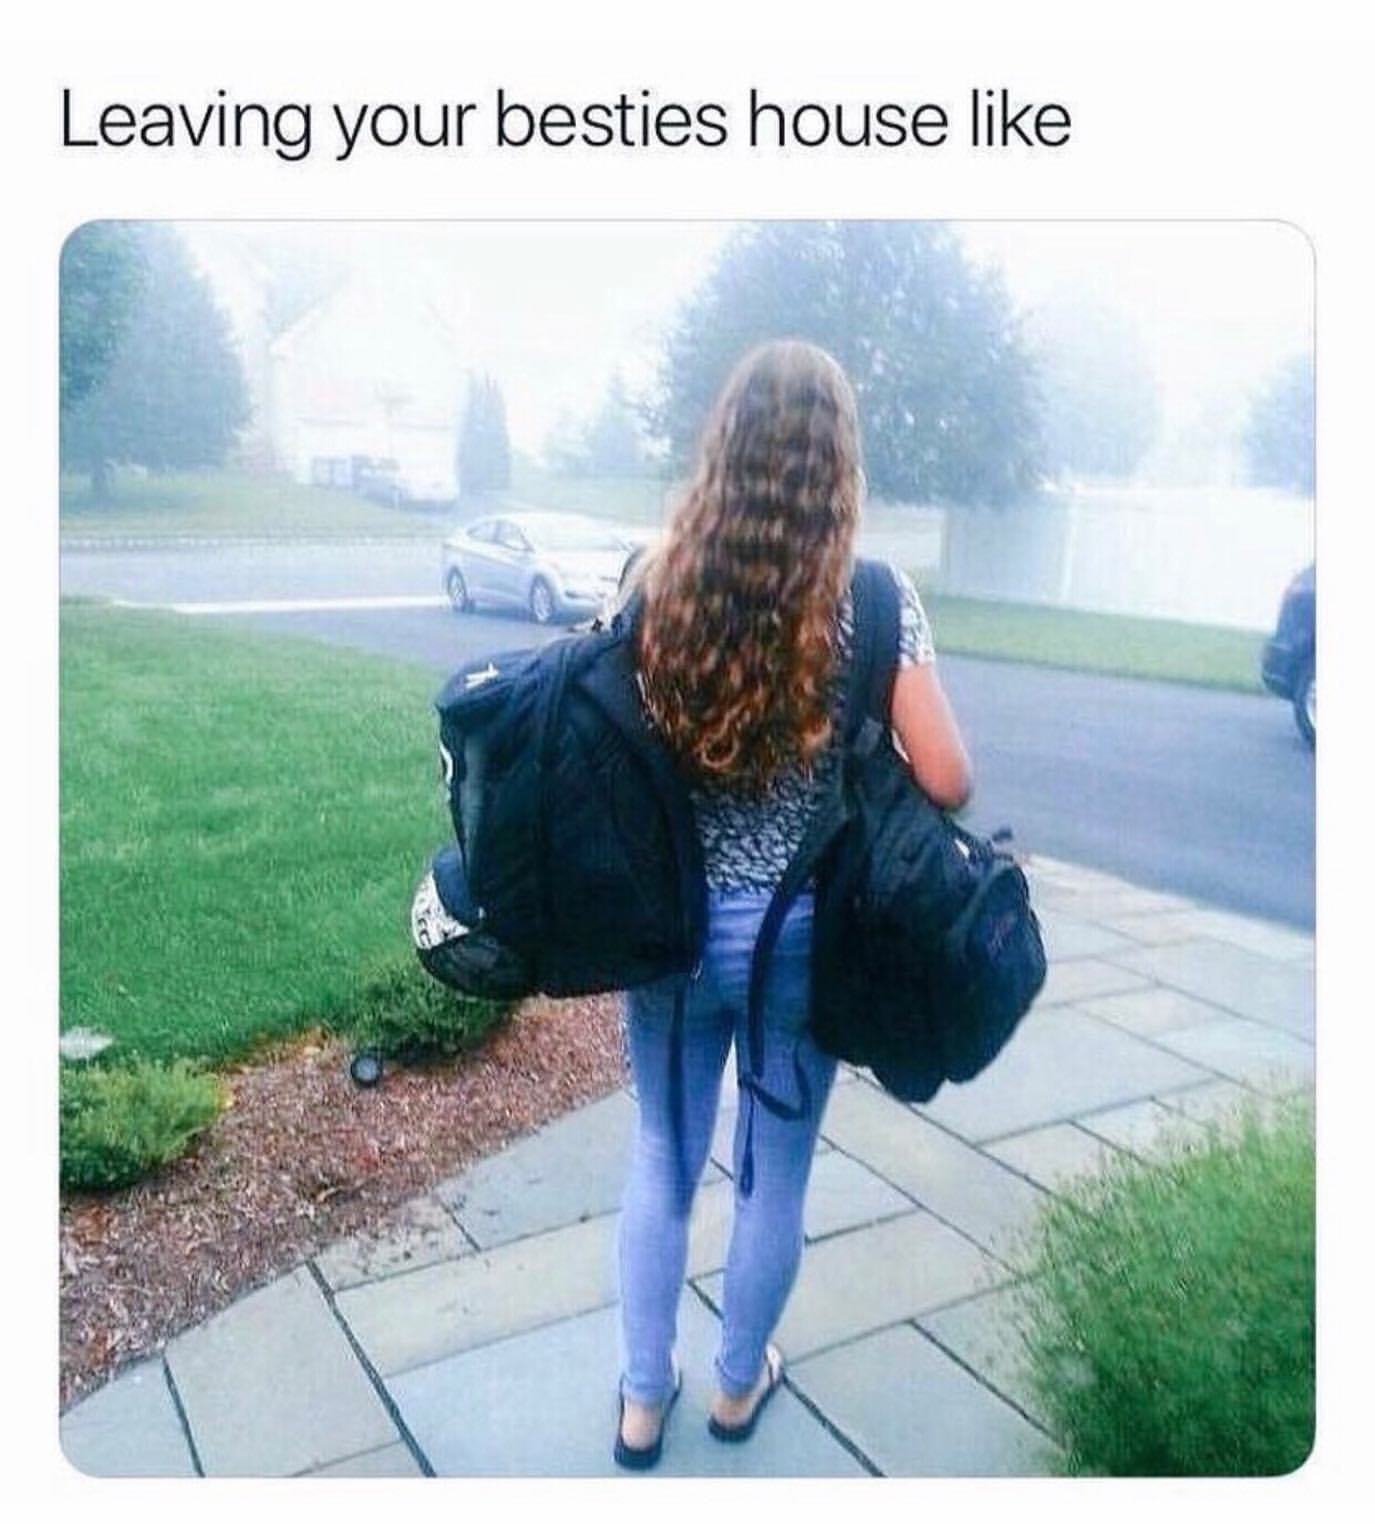 Leaving your besties house like.